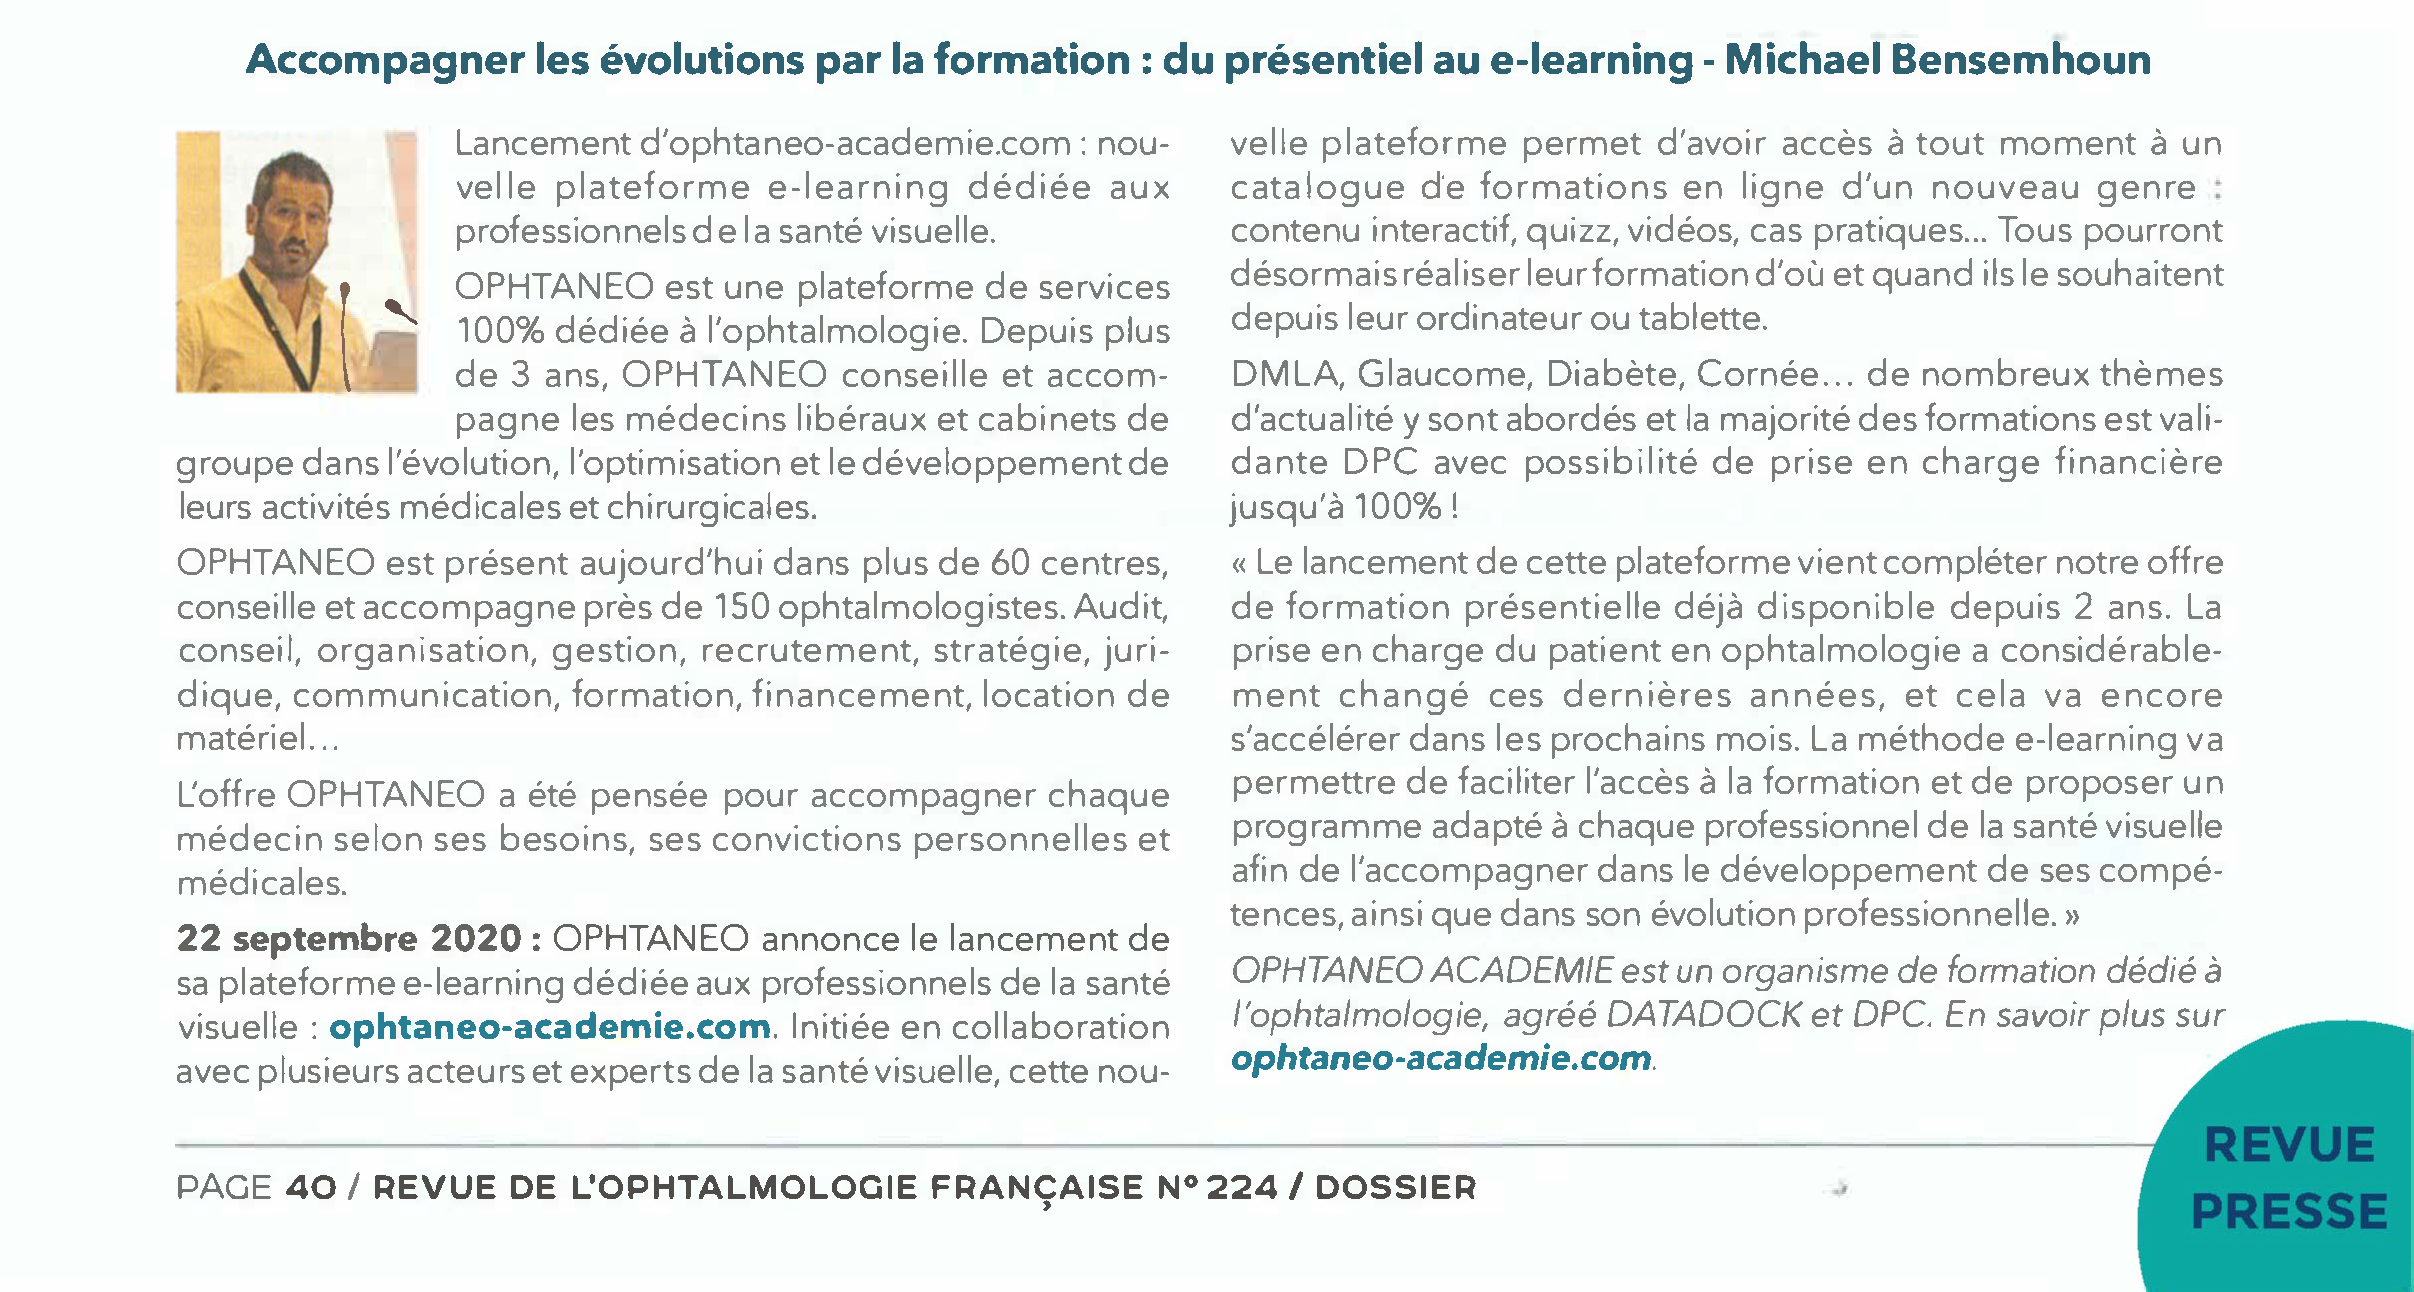 Parution presse OPHTANEO dans la ROF - Octobre 2020 - Edition n°224  : focus ophtaneo-academie.com